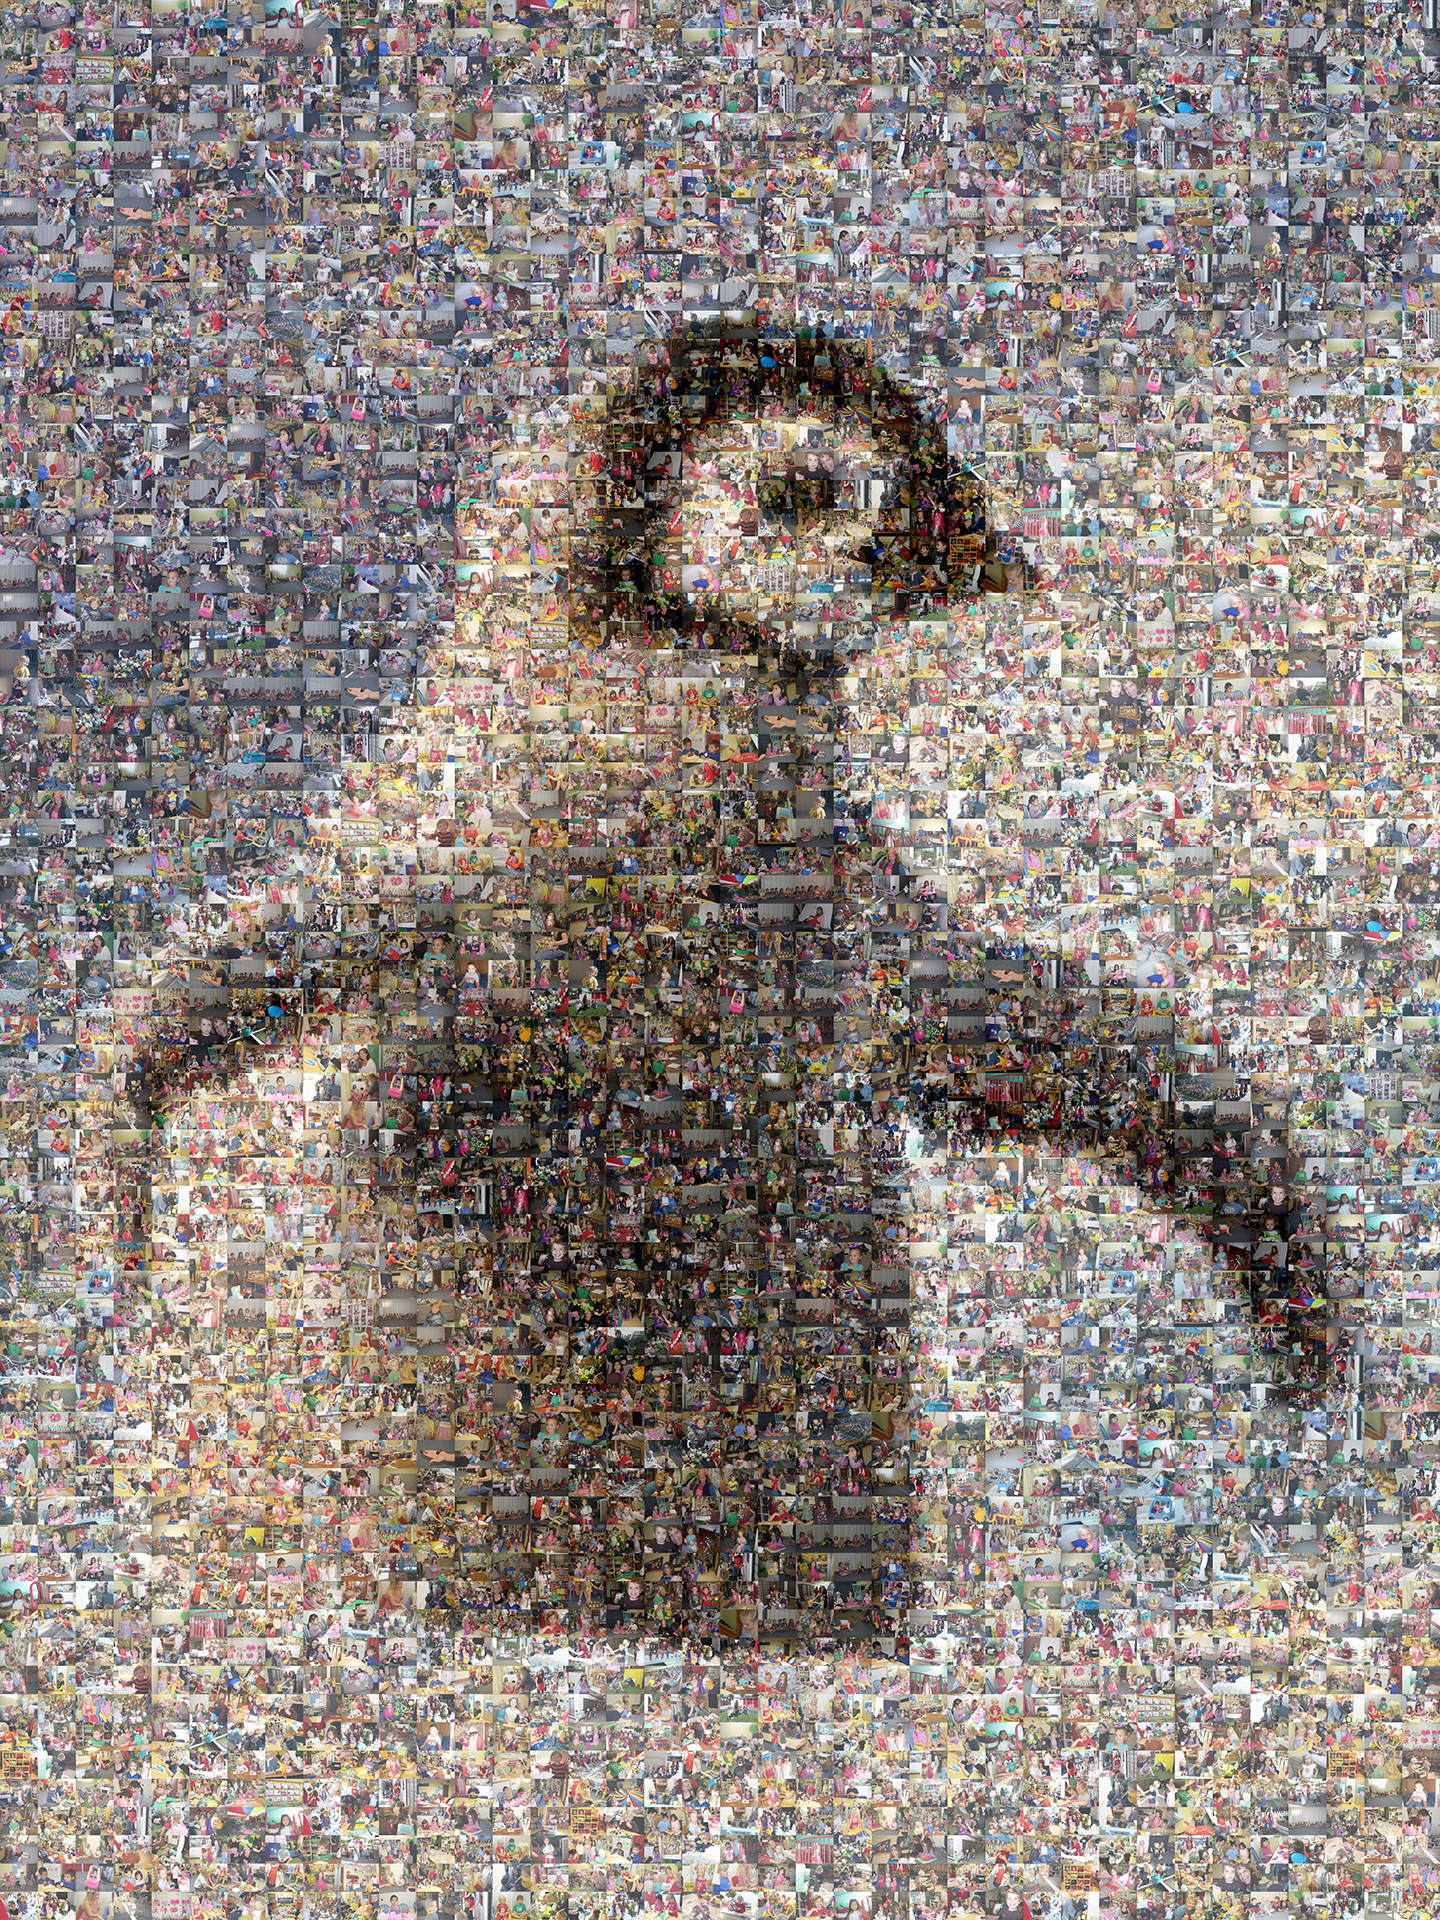 photo mosaic using 443 customer and employee photos